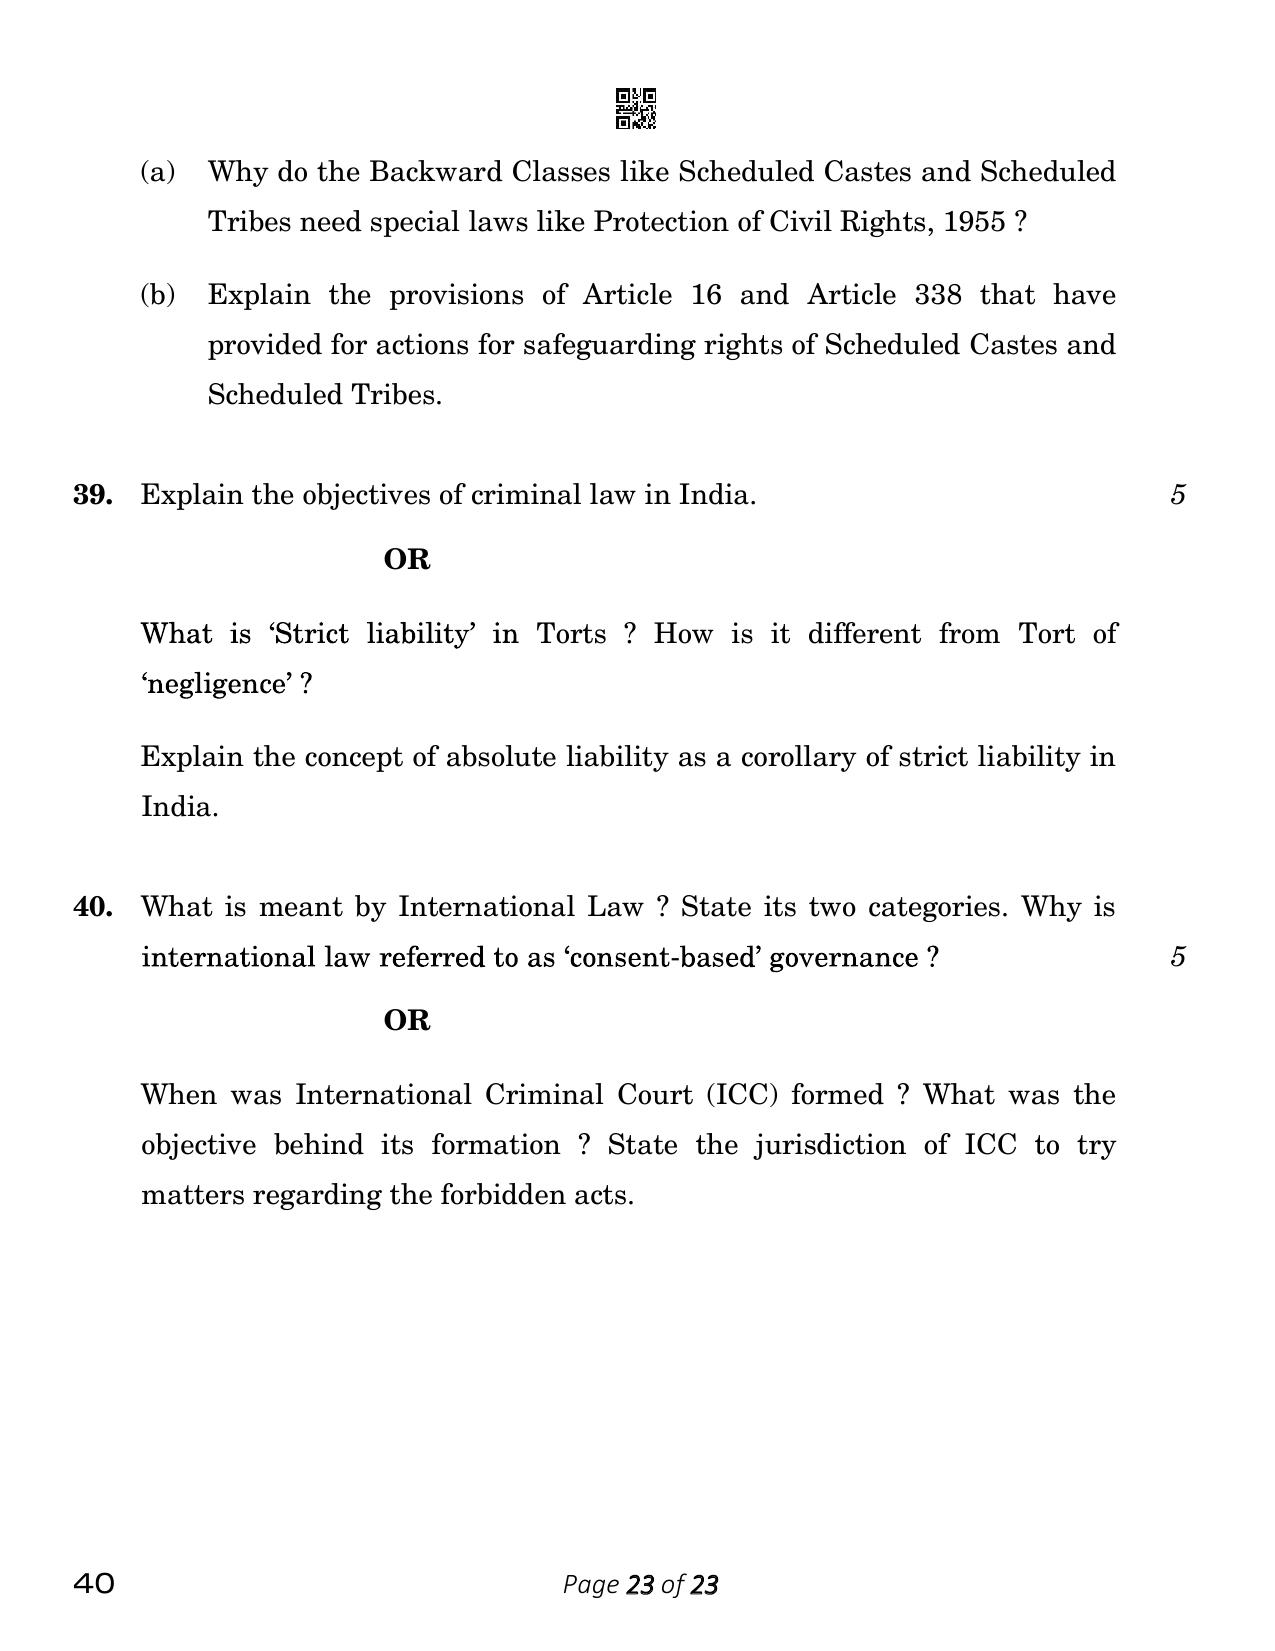 CBSE Class 12 Legal Studies (Compartment) 2023 Question Paper - Page 23